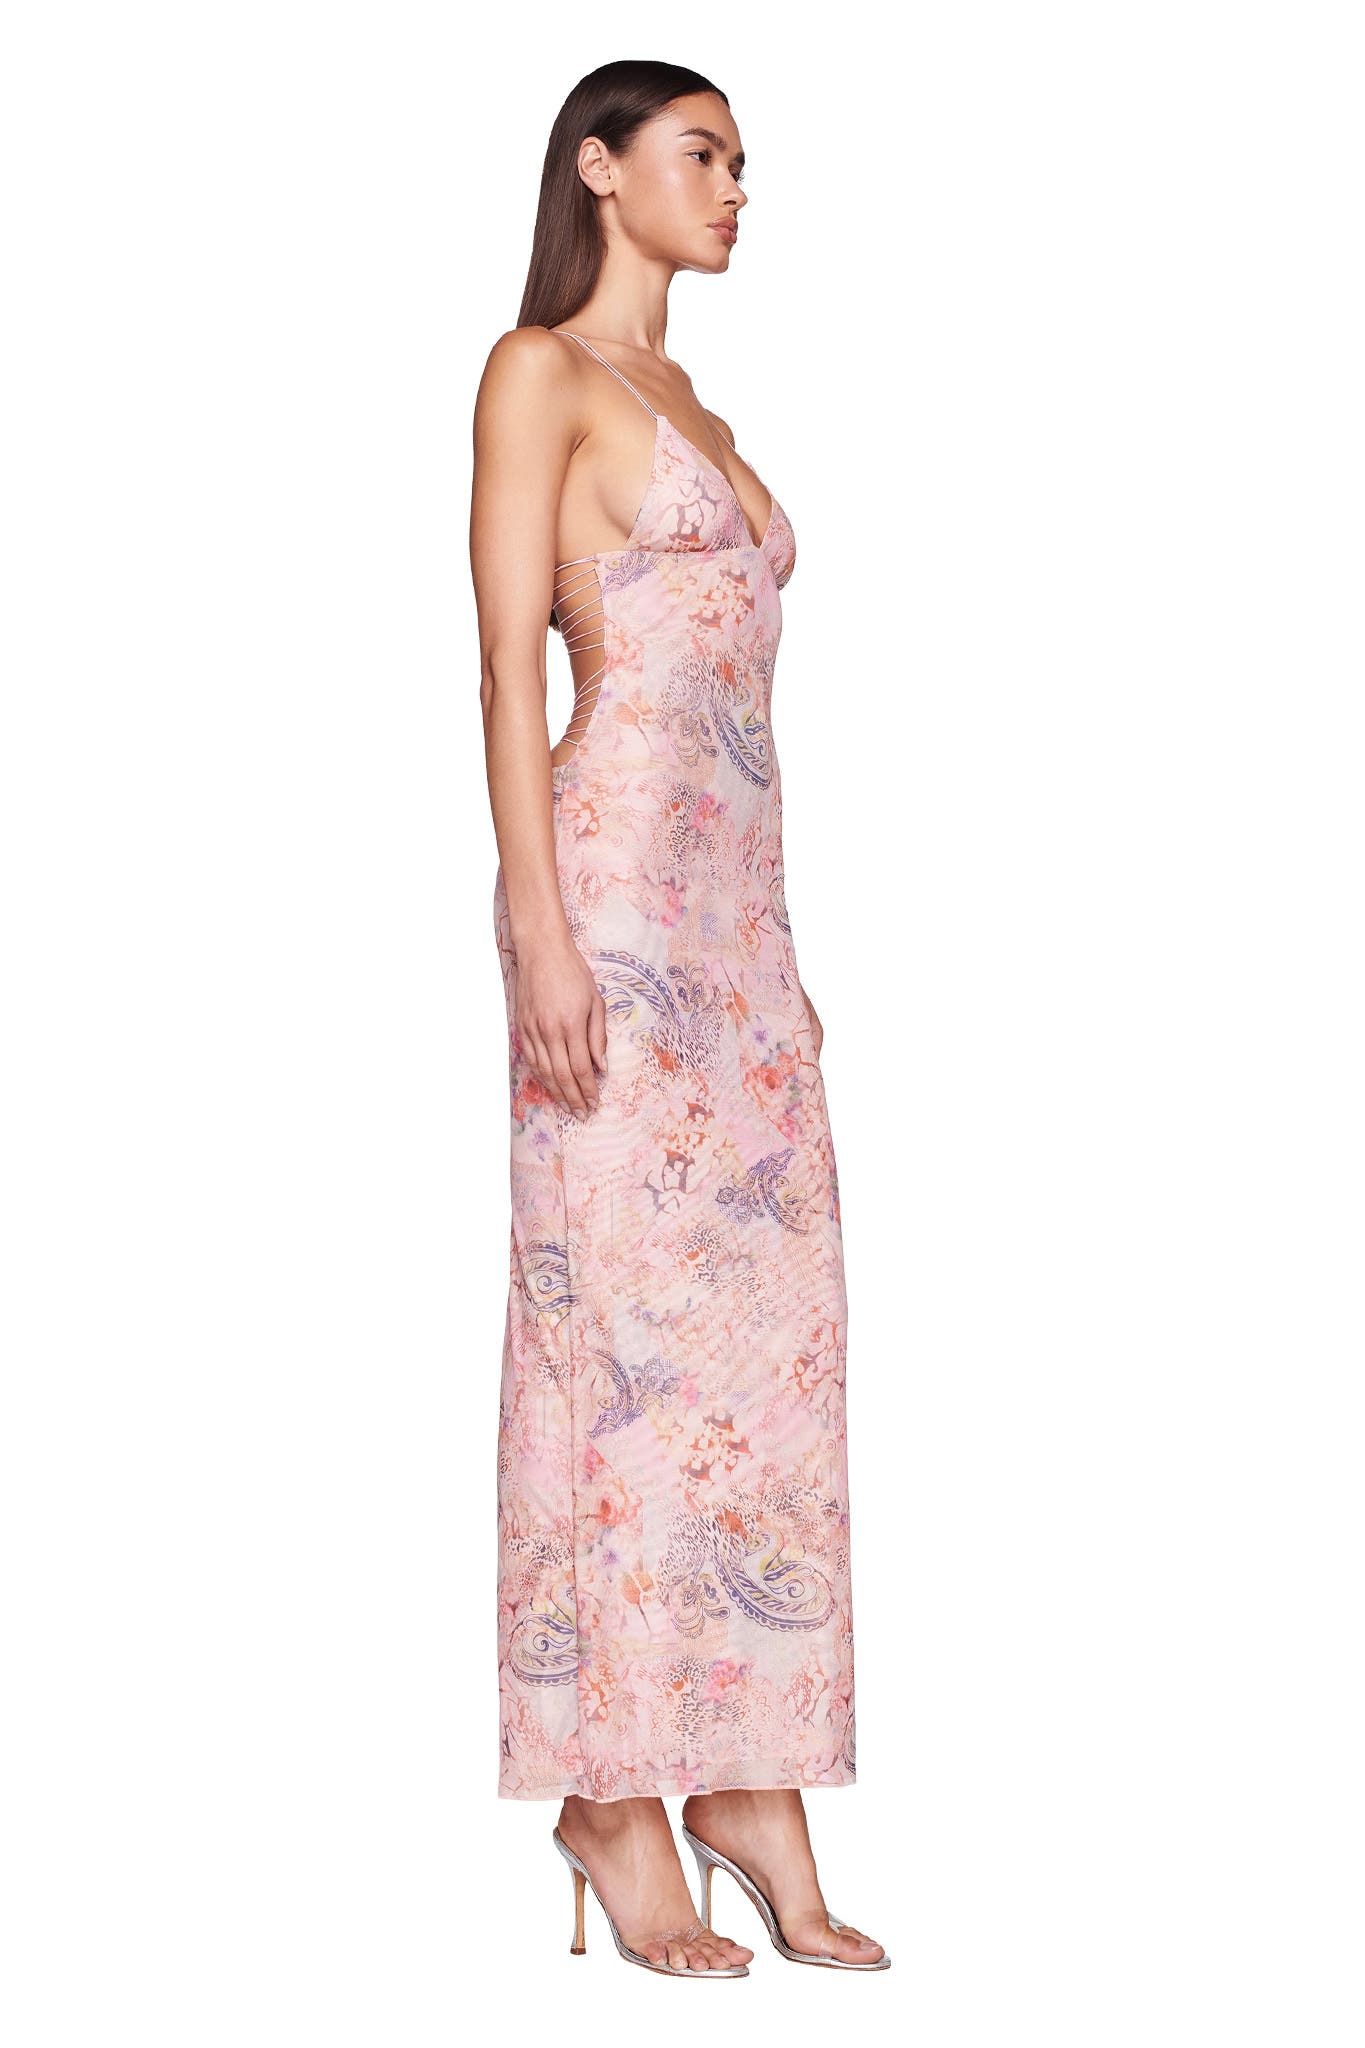 Floral Satin Backless Dress aclosy